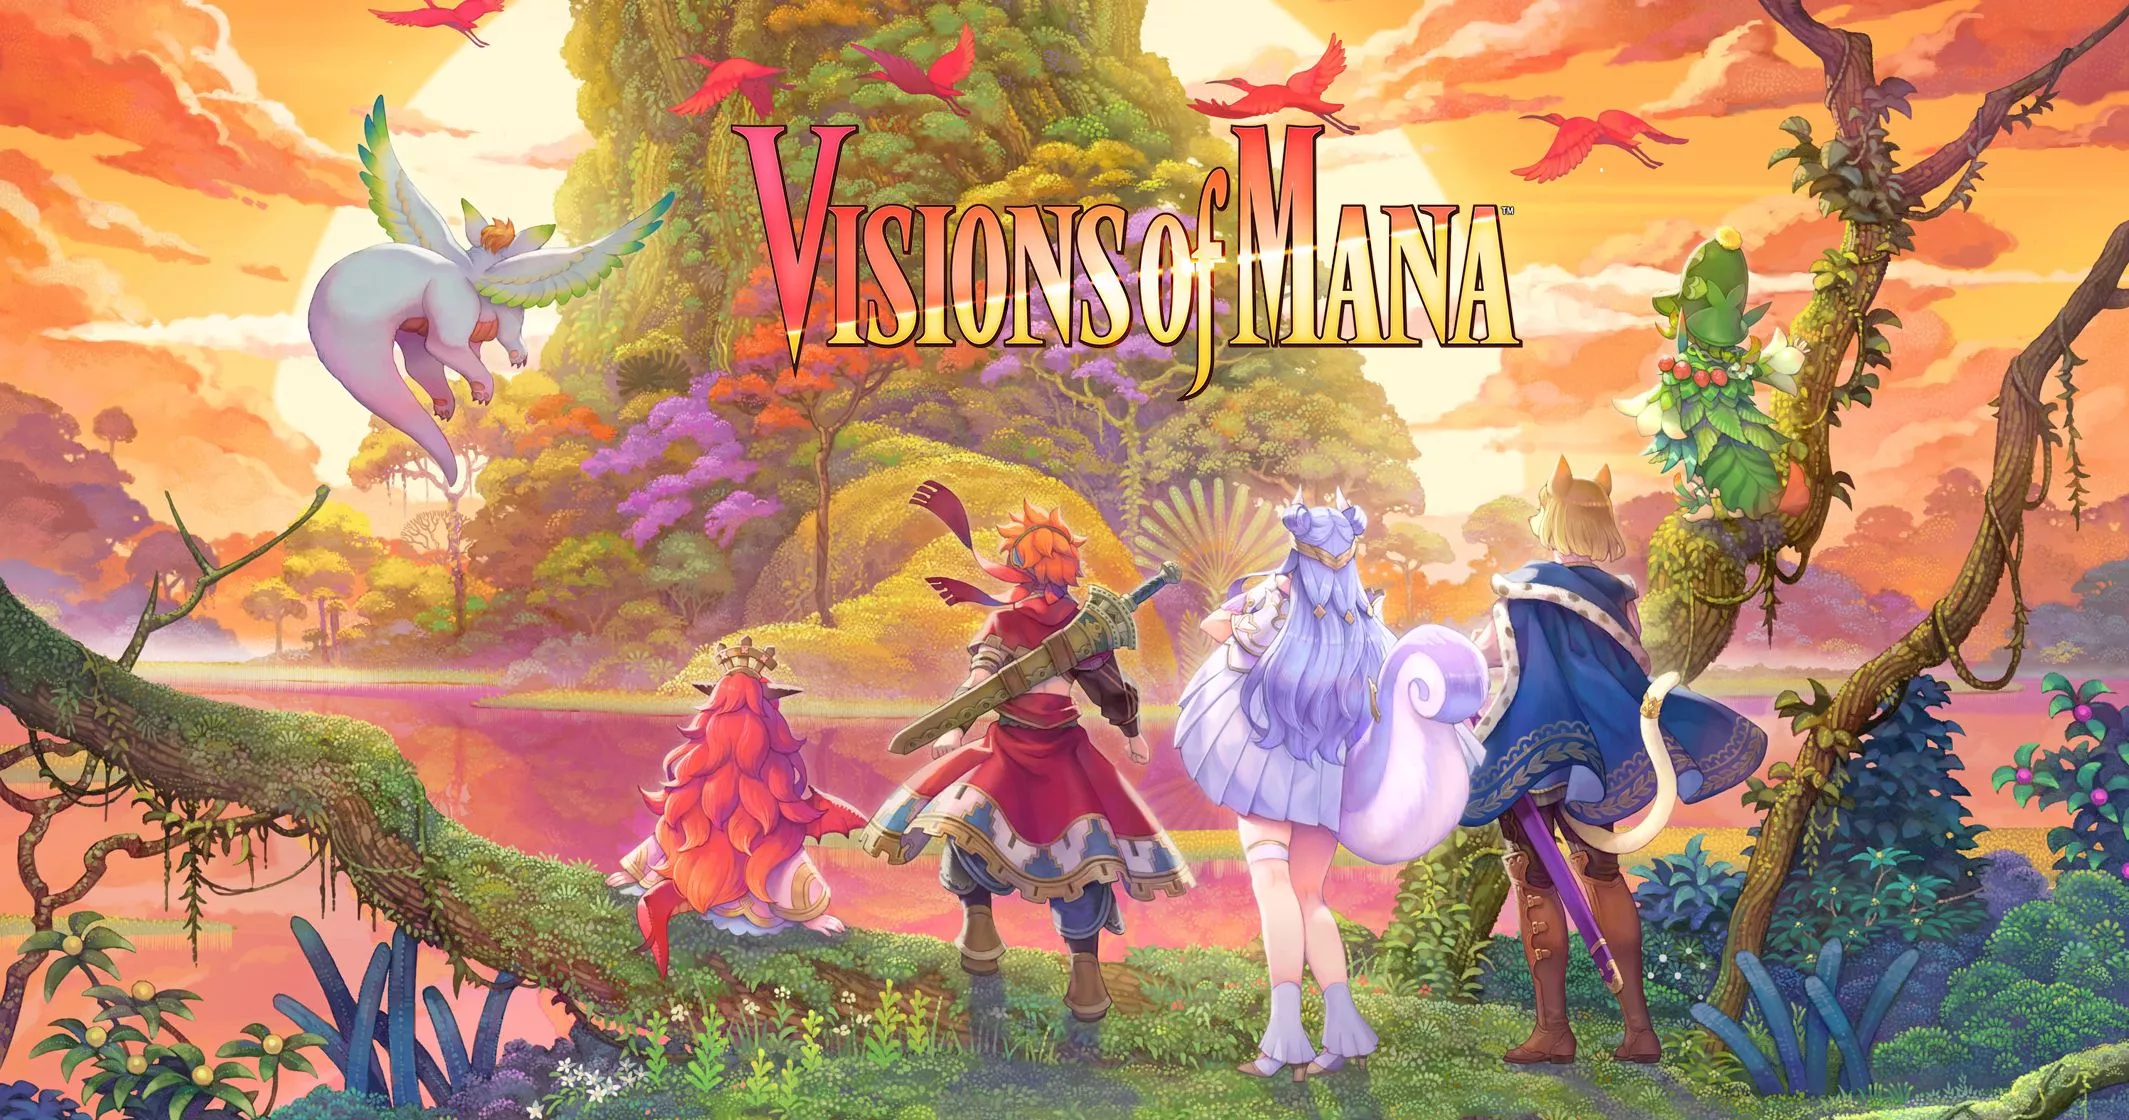 Visions of Mana von Square Enix angekündigt Heropic